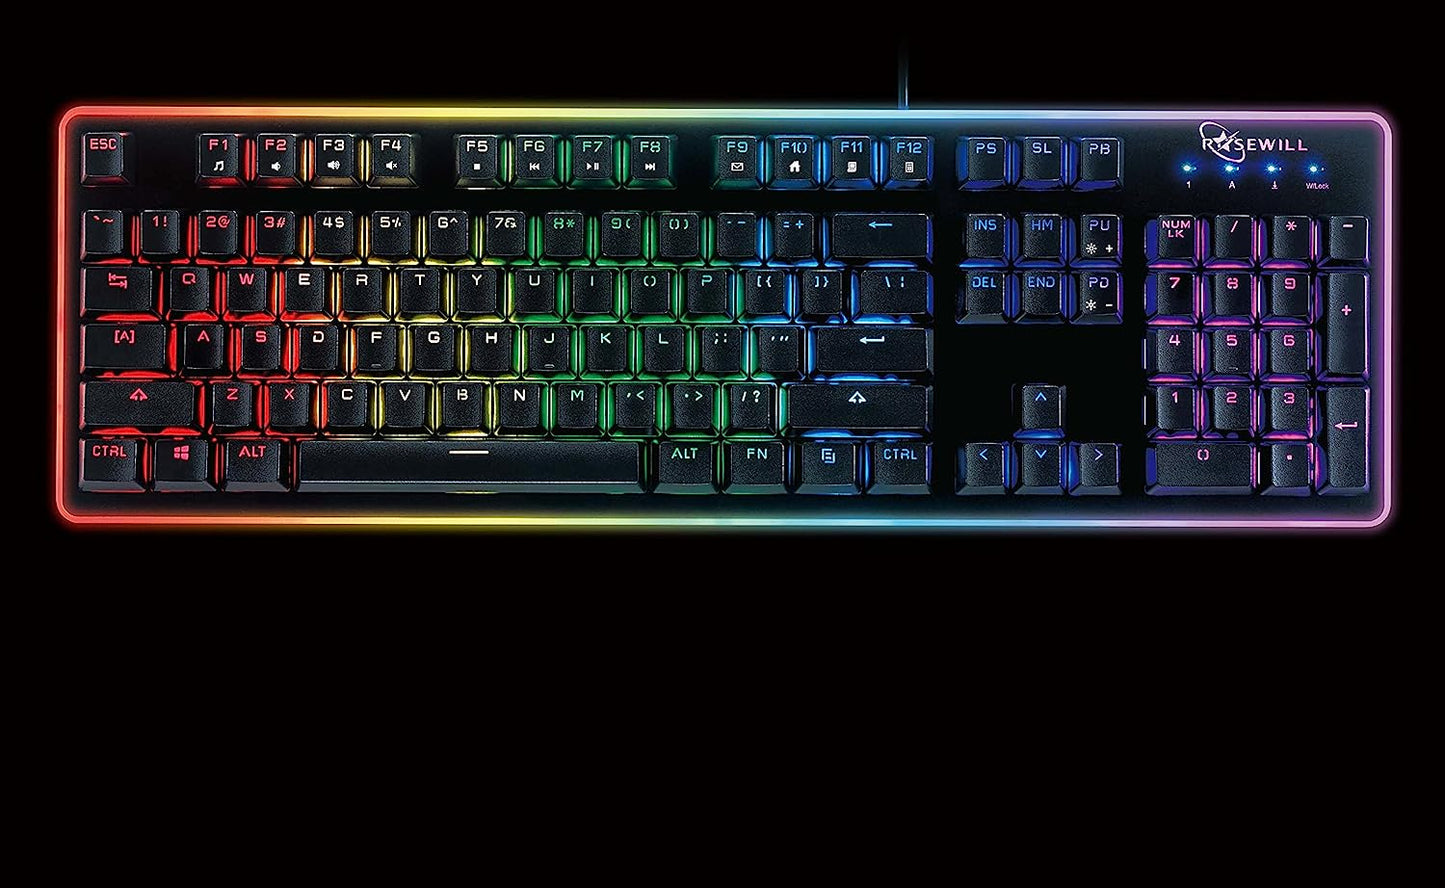 ROSEWILL Gaming Keyboard Model K51, Chroma RGB LED Backlit Wired Membrane Mechanical